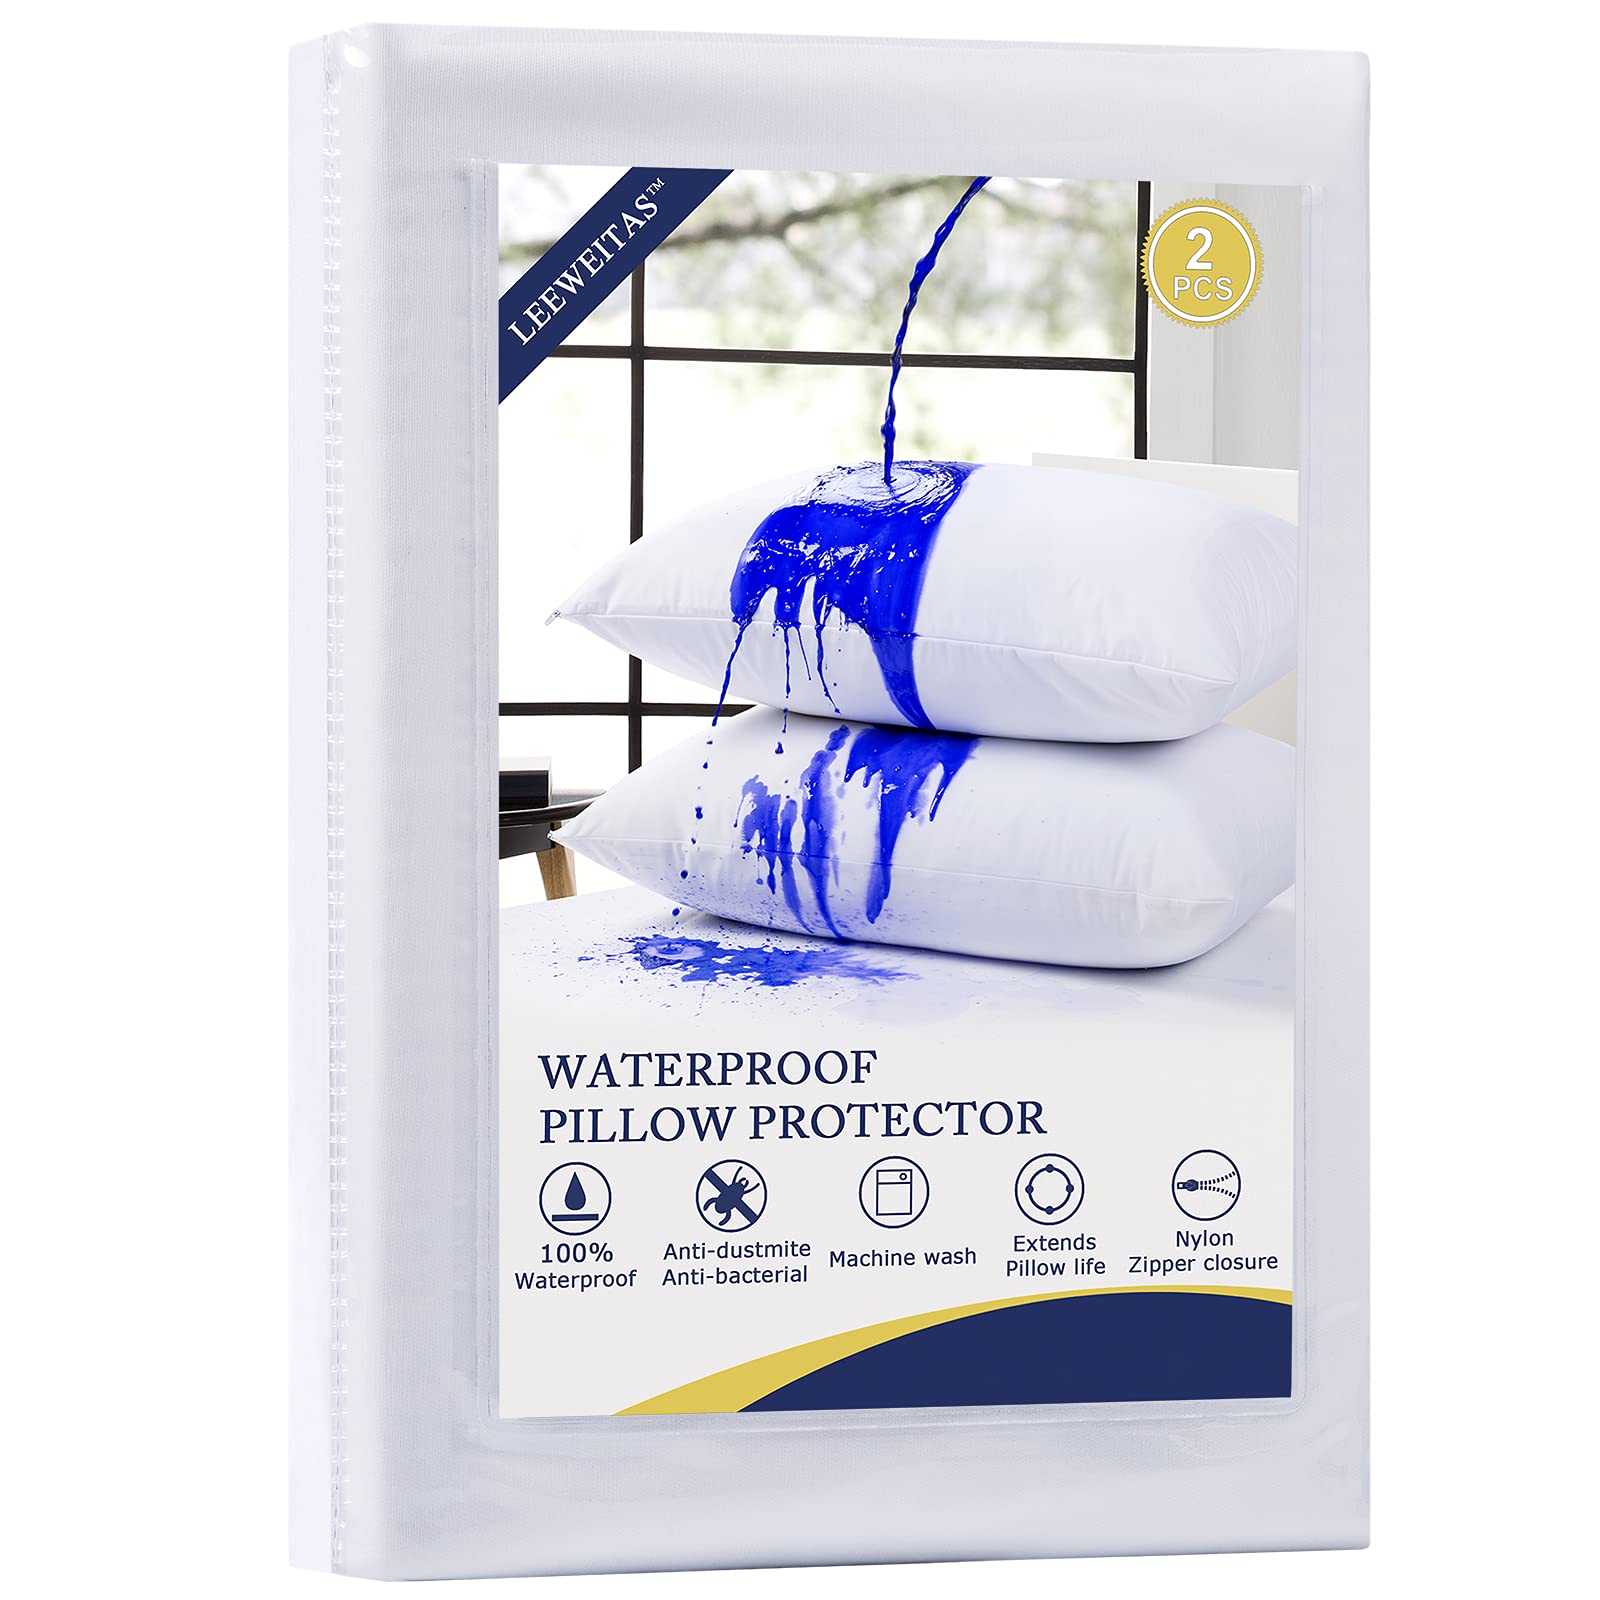 LEEWEITAS Waterproof Pillow Protector-Zipped Pillow Protectors 2 Pack, Pillow Covers Breathable Membrane, 50x75cm Size Pillow Cases.